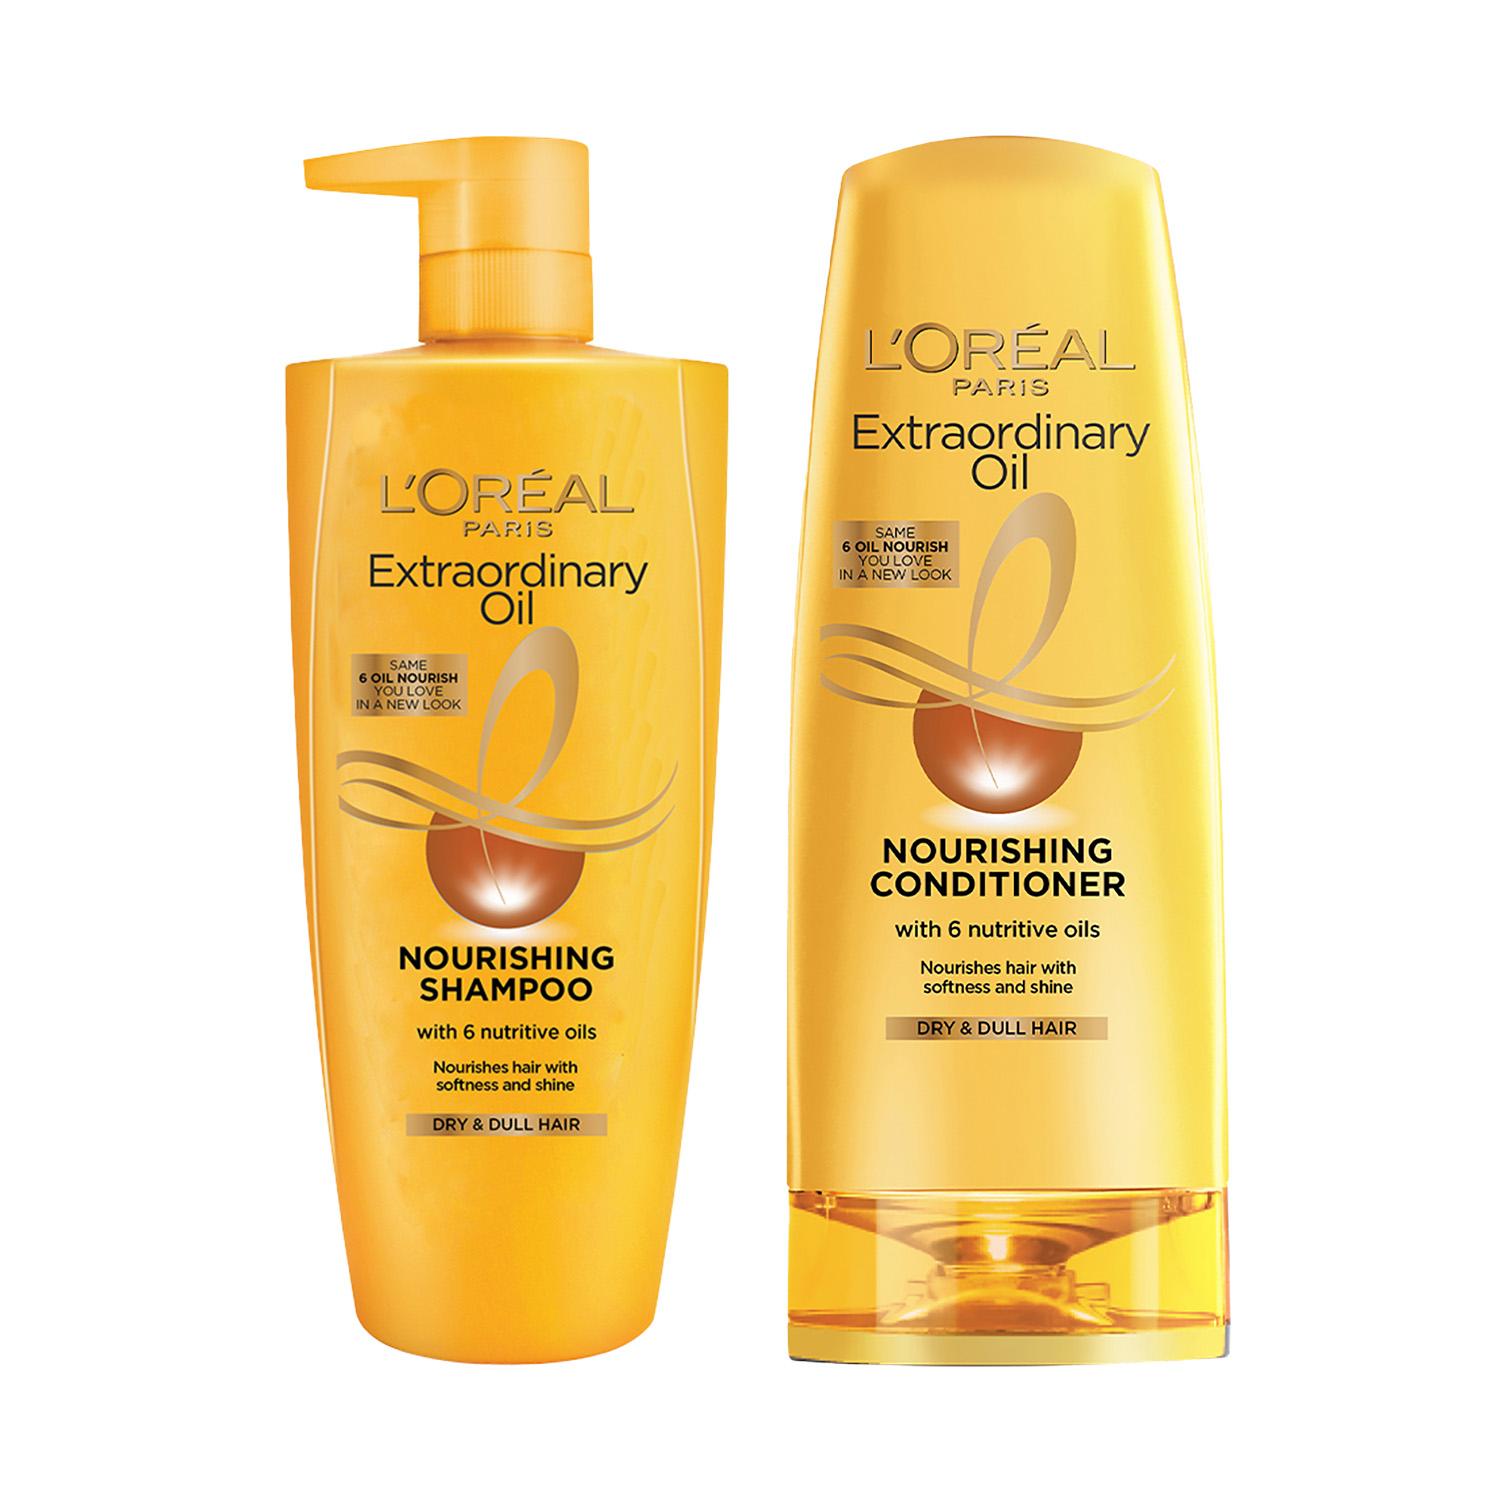 L'Oreal Paris | L'Oreal Paris Extraordinary Oil Hair Combo - Pack of 2 (Shampoo & Conditioner)